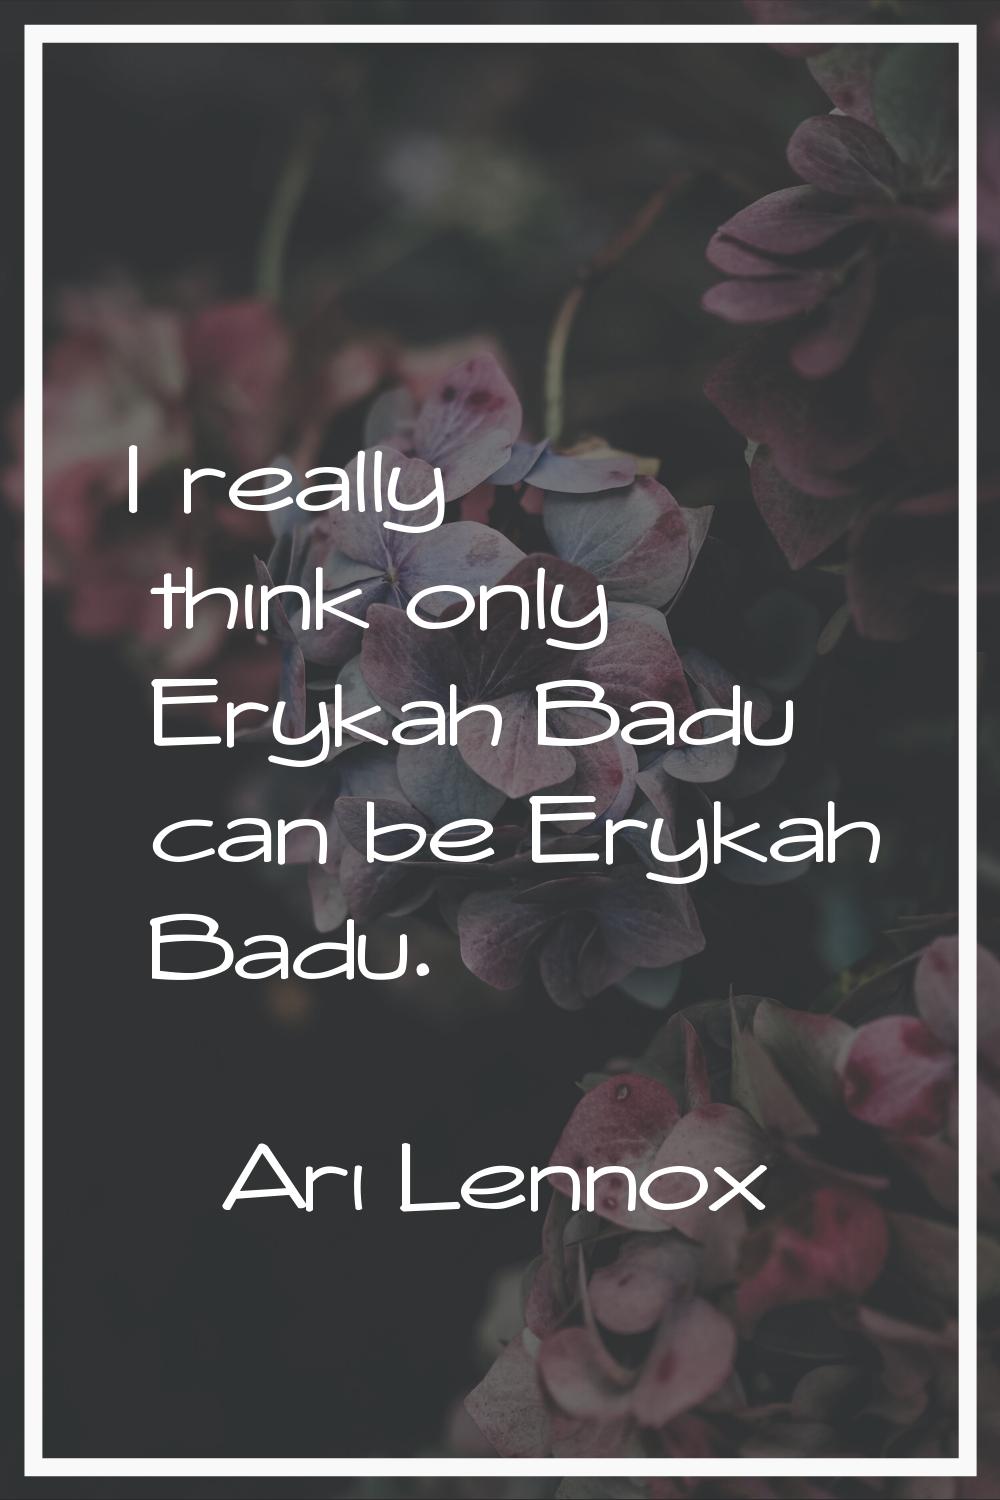 I really think only Erykah Badu can be Erykah Badu.